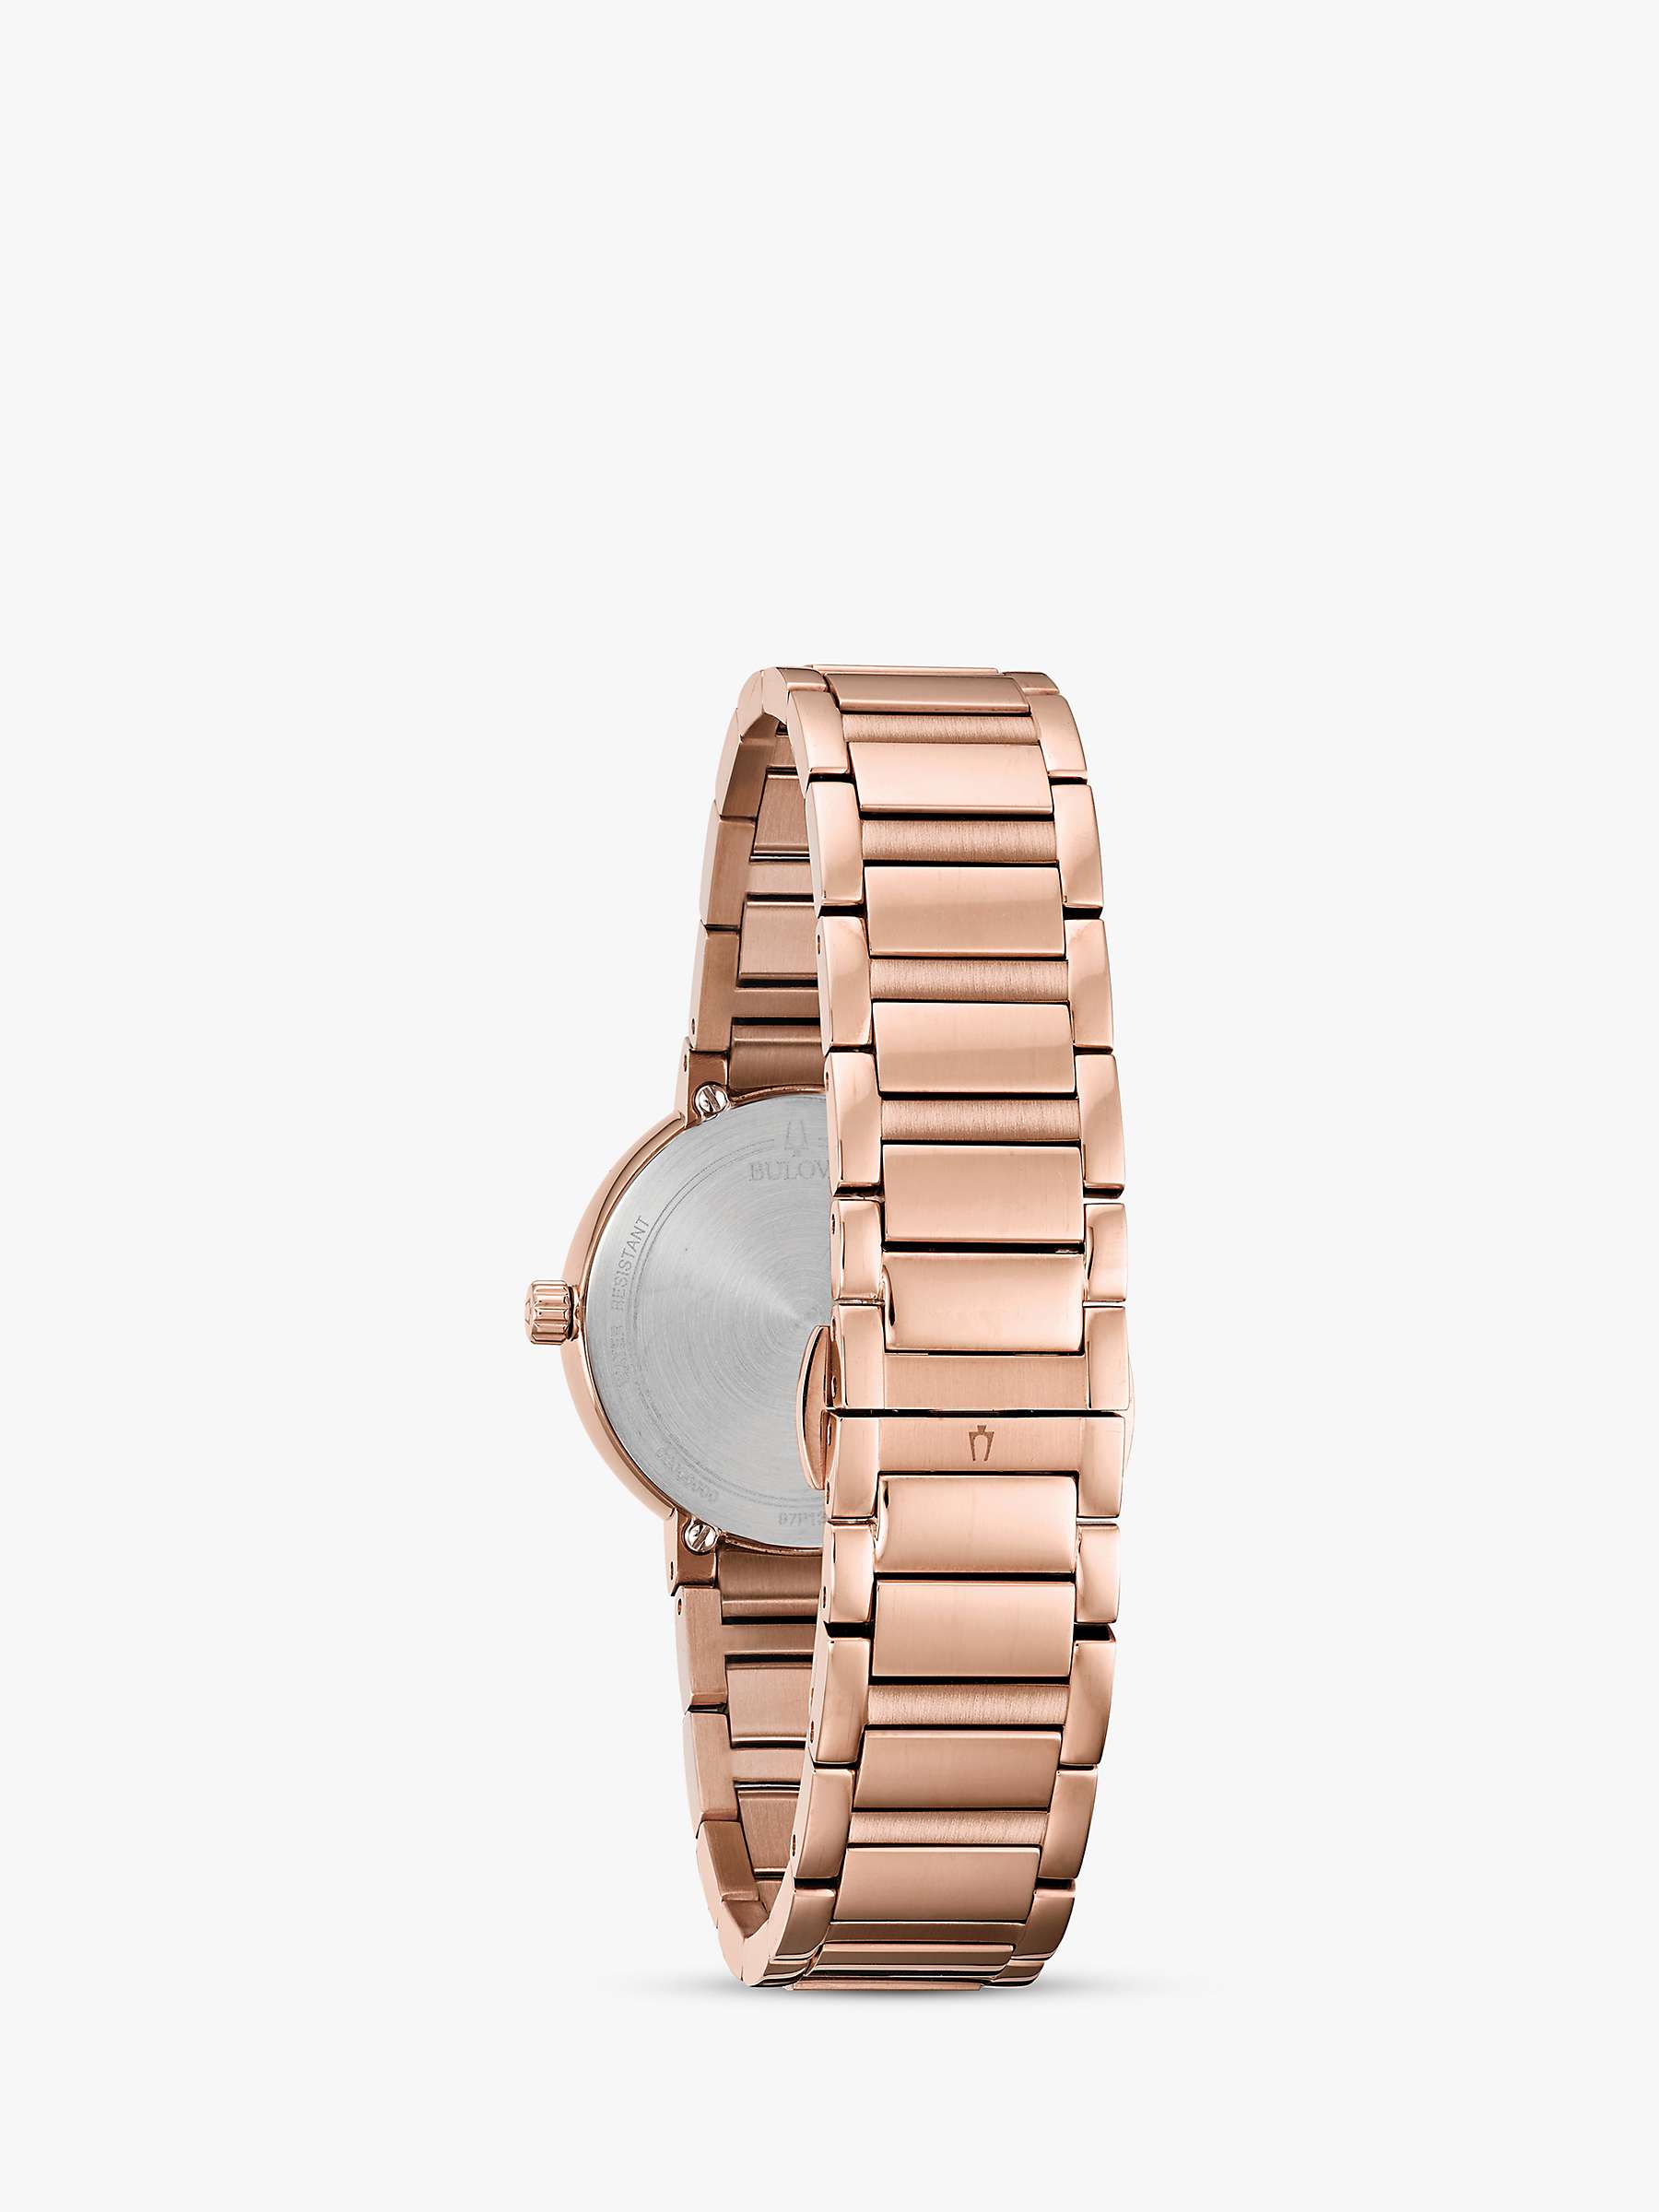 Buy Bulova Women's Modern Diamond Bracelet Strap Watch, Rose Gold 97P132 Online at johnlewis.com